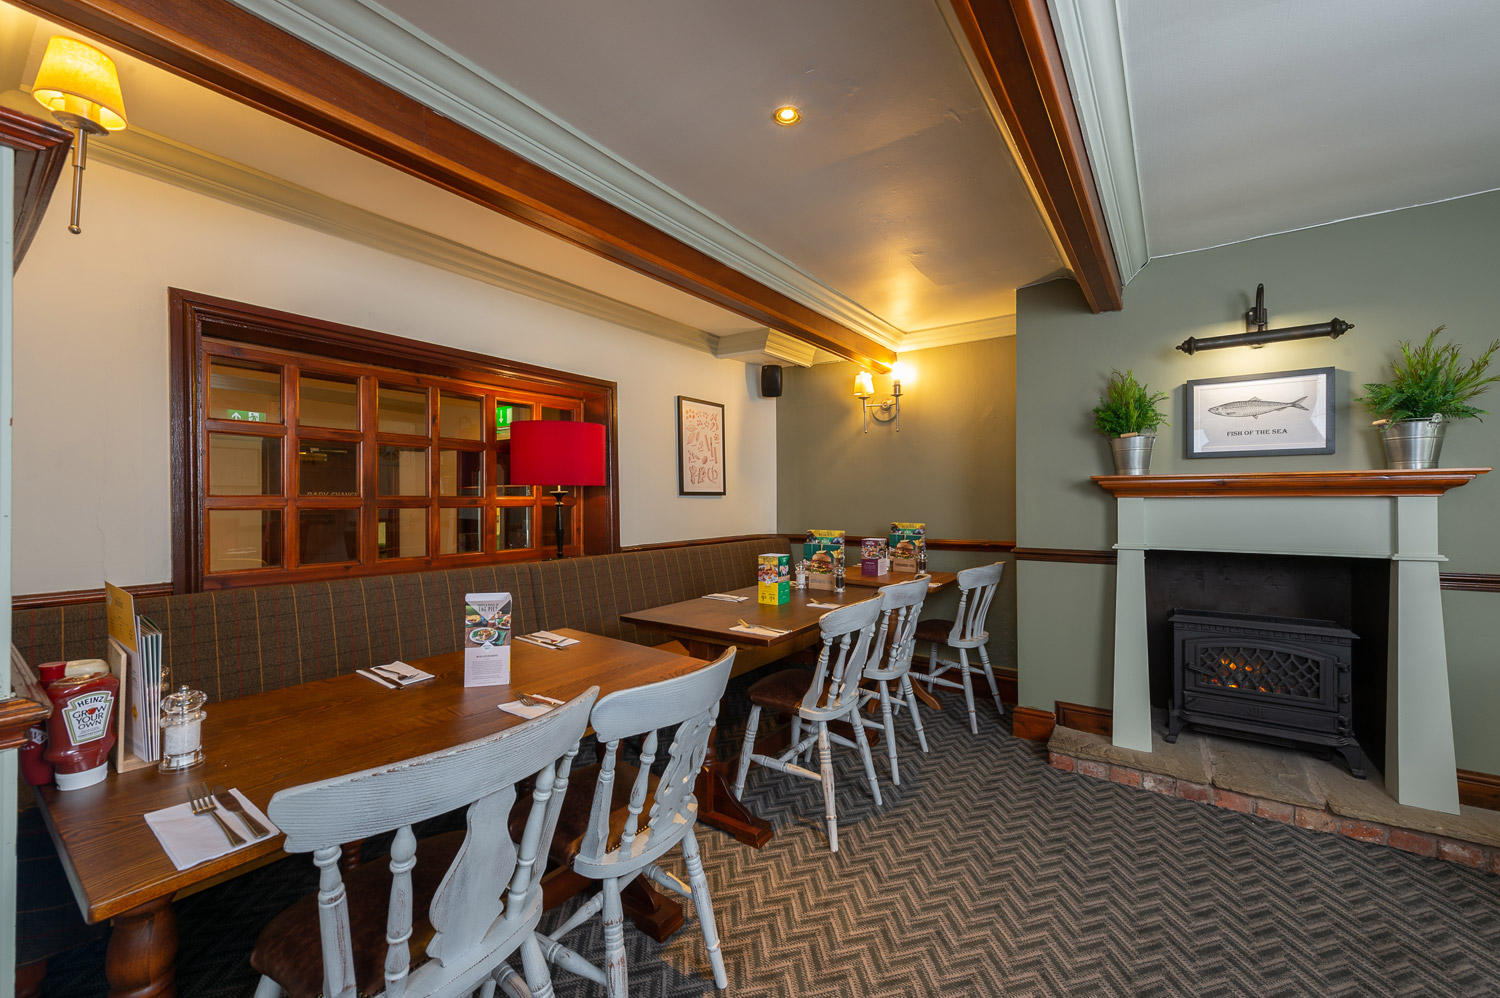 Images Anchor Inn Cookhouse + Pub